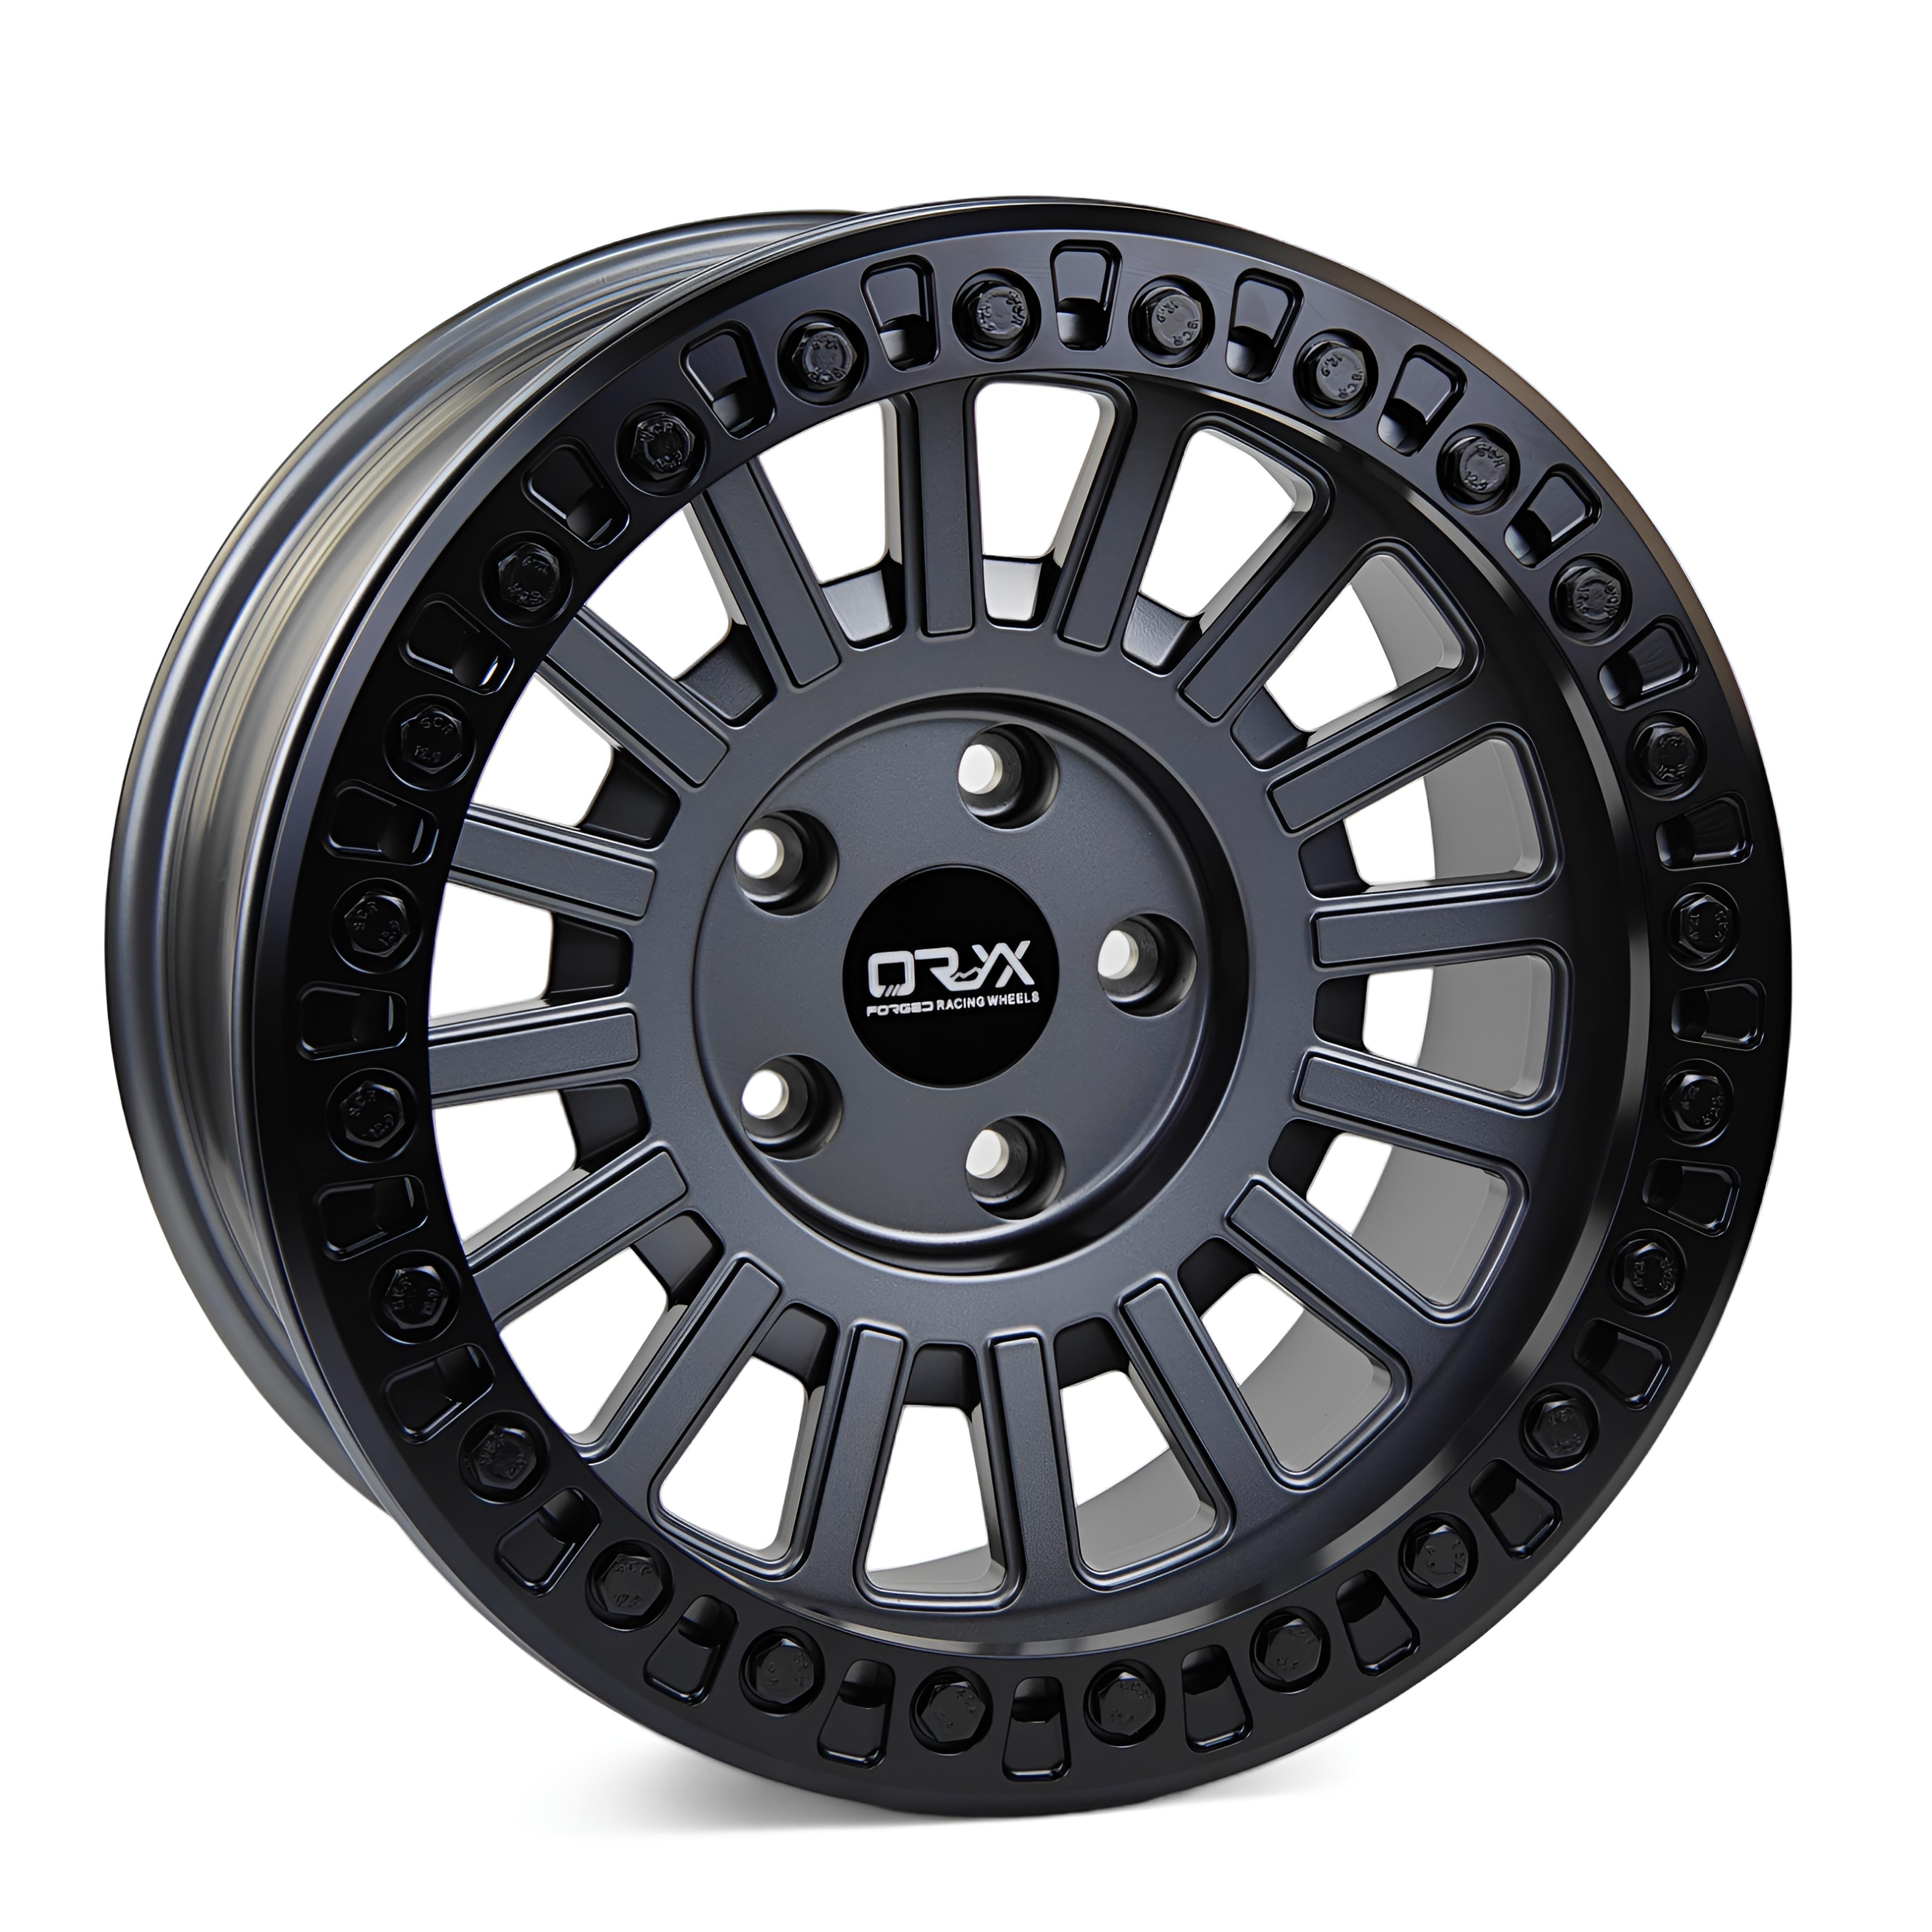 ORYX Forged Aluminum Bead lock Rims-ORX02 for Jeep Wrangler JK/JL/JT